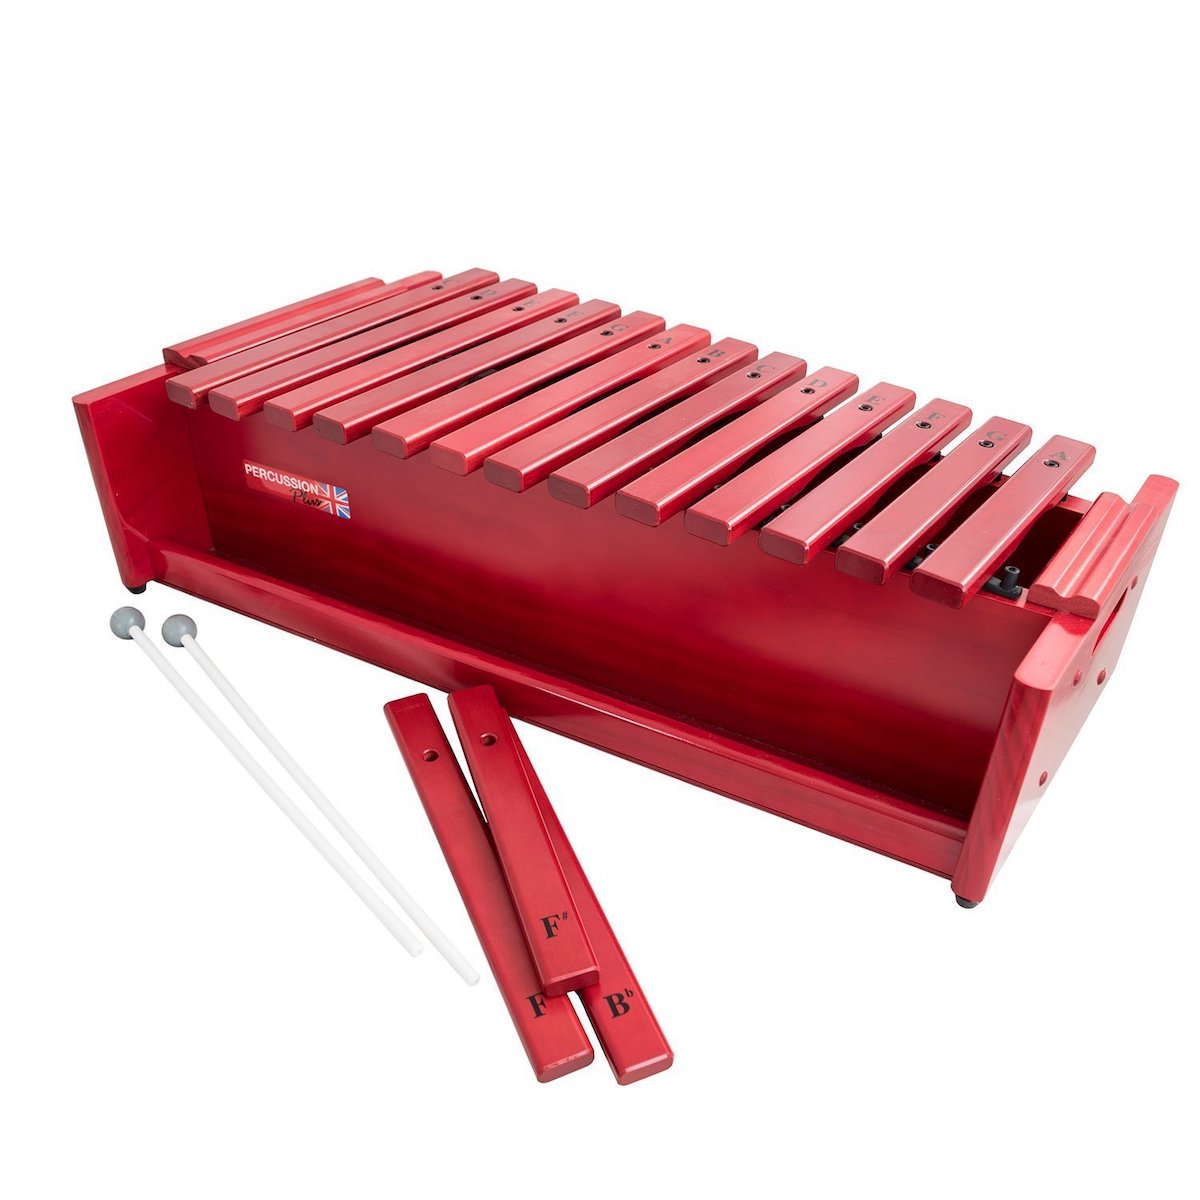 Percussion Plus Classic Red Box Alto Diatonic Xylophone